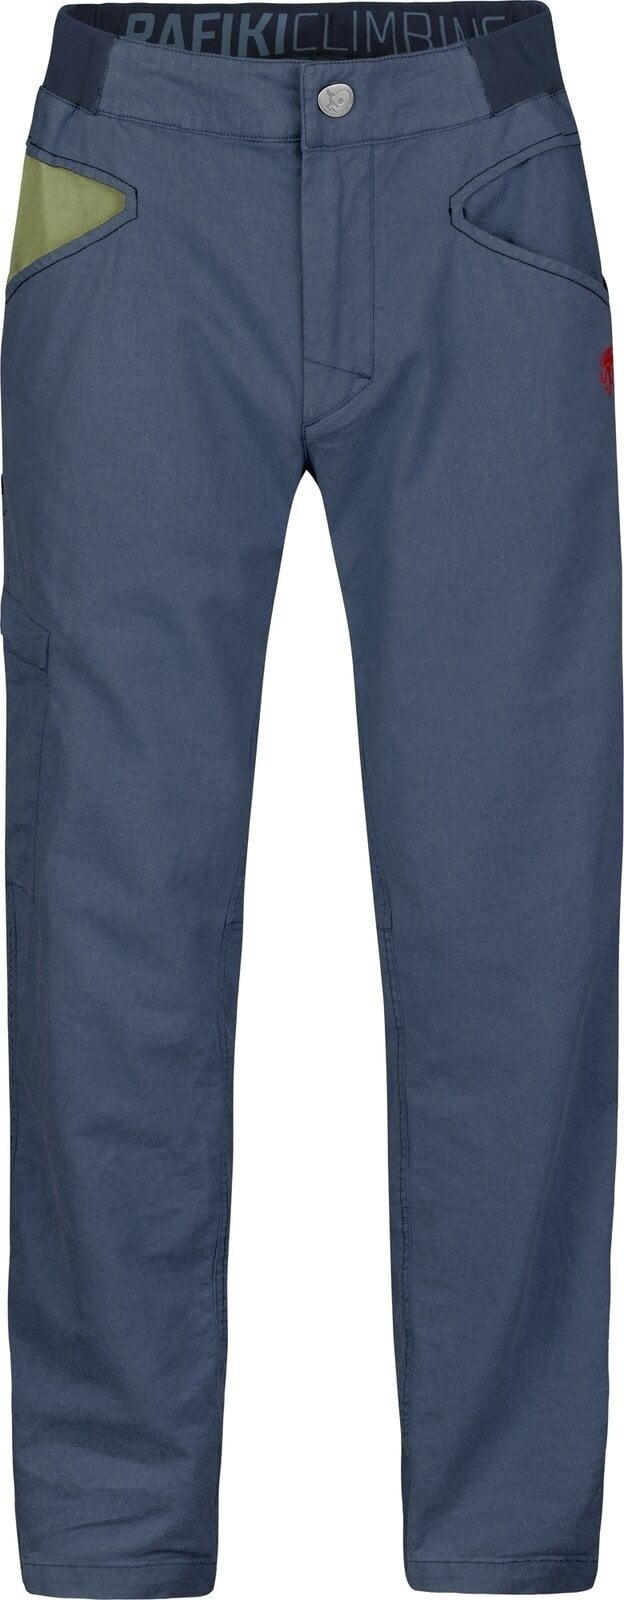 Outdoorové kalhoty Rafiki Grip Man Pants India Ink 2XL Outdoorové kalhoty